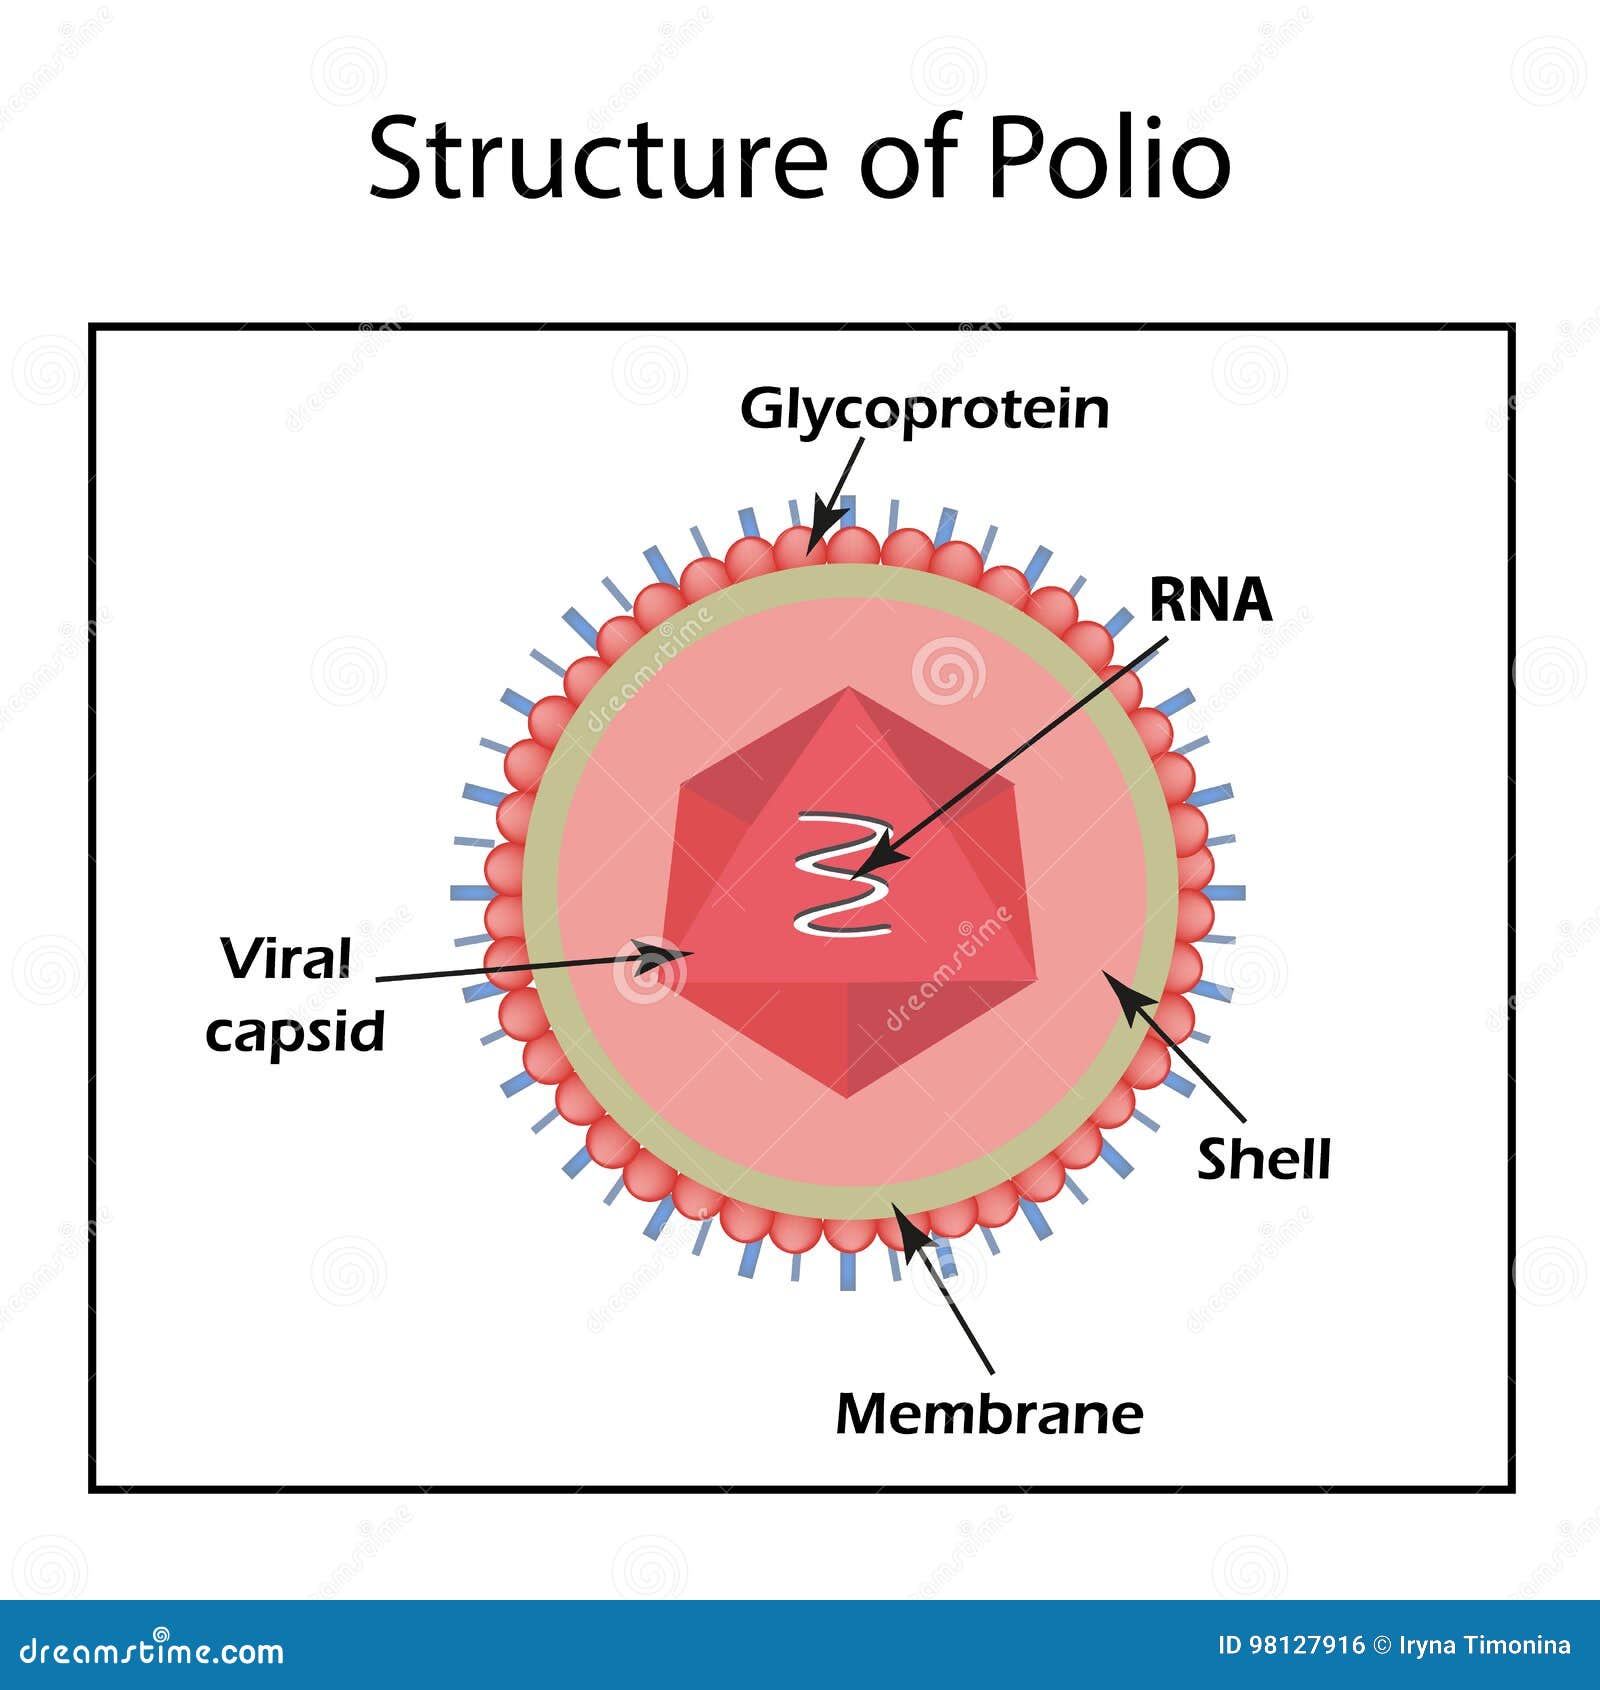 the structure of the polio virus. enterovirus.